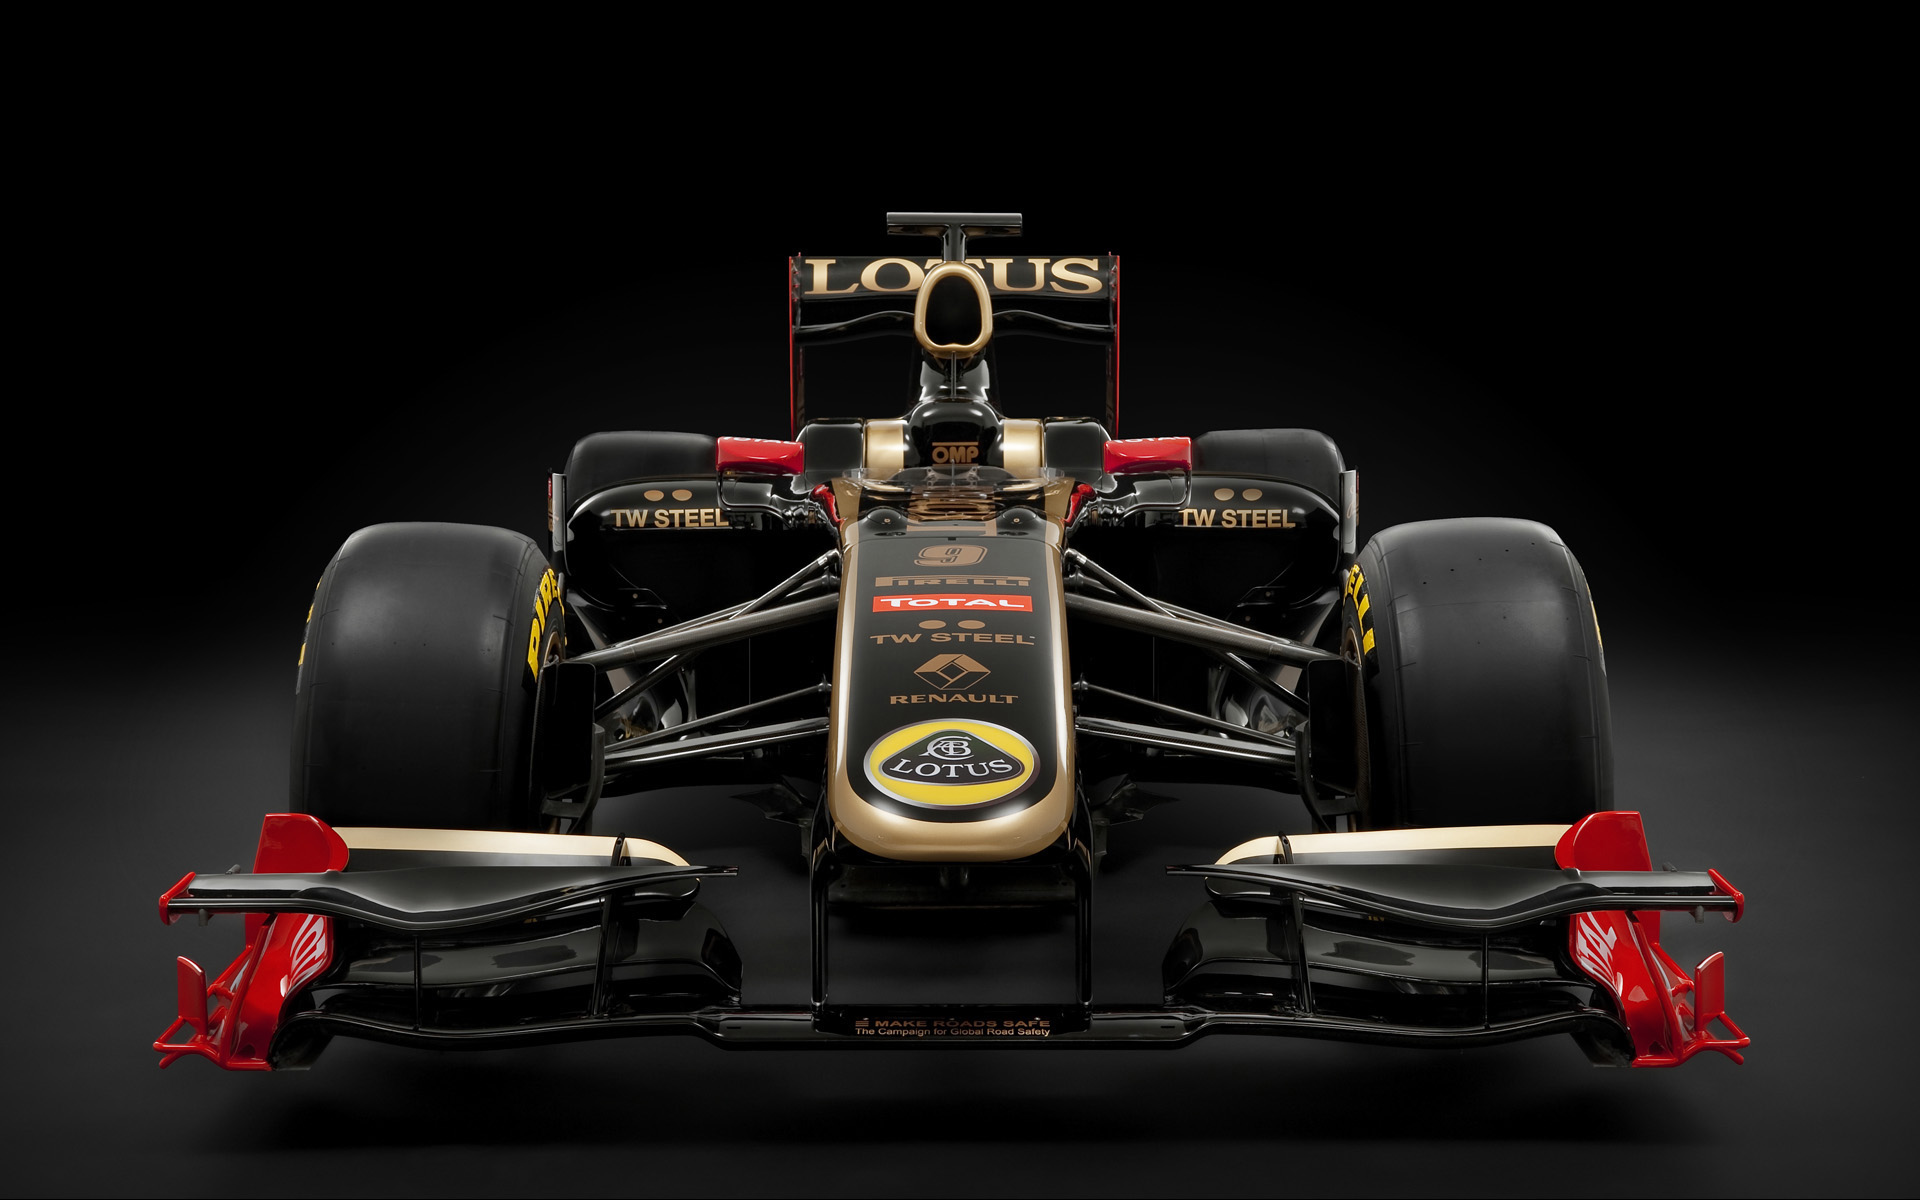  2011 Lotus Renault F1 R31 Wallpaper.